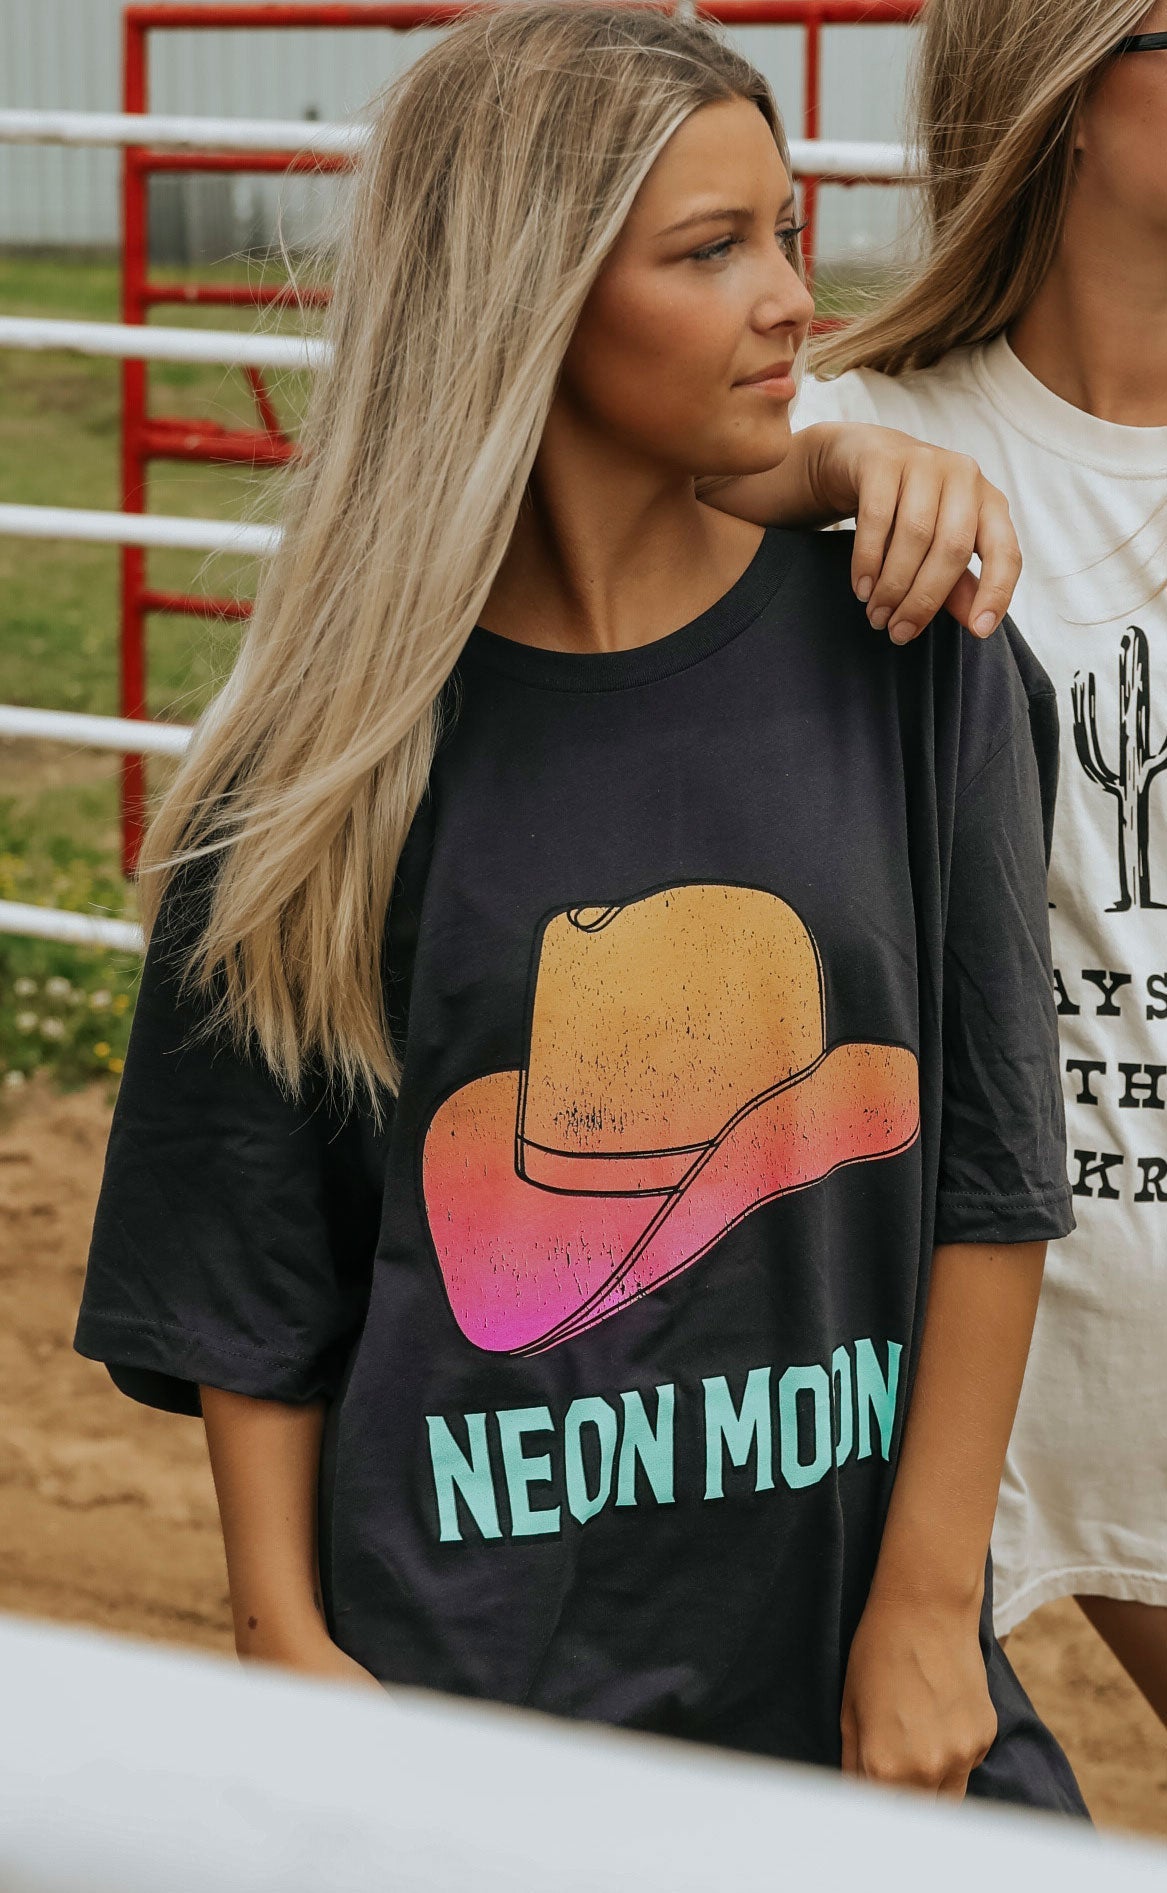 Neon Moon Graphic Tee